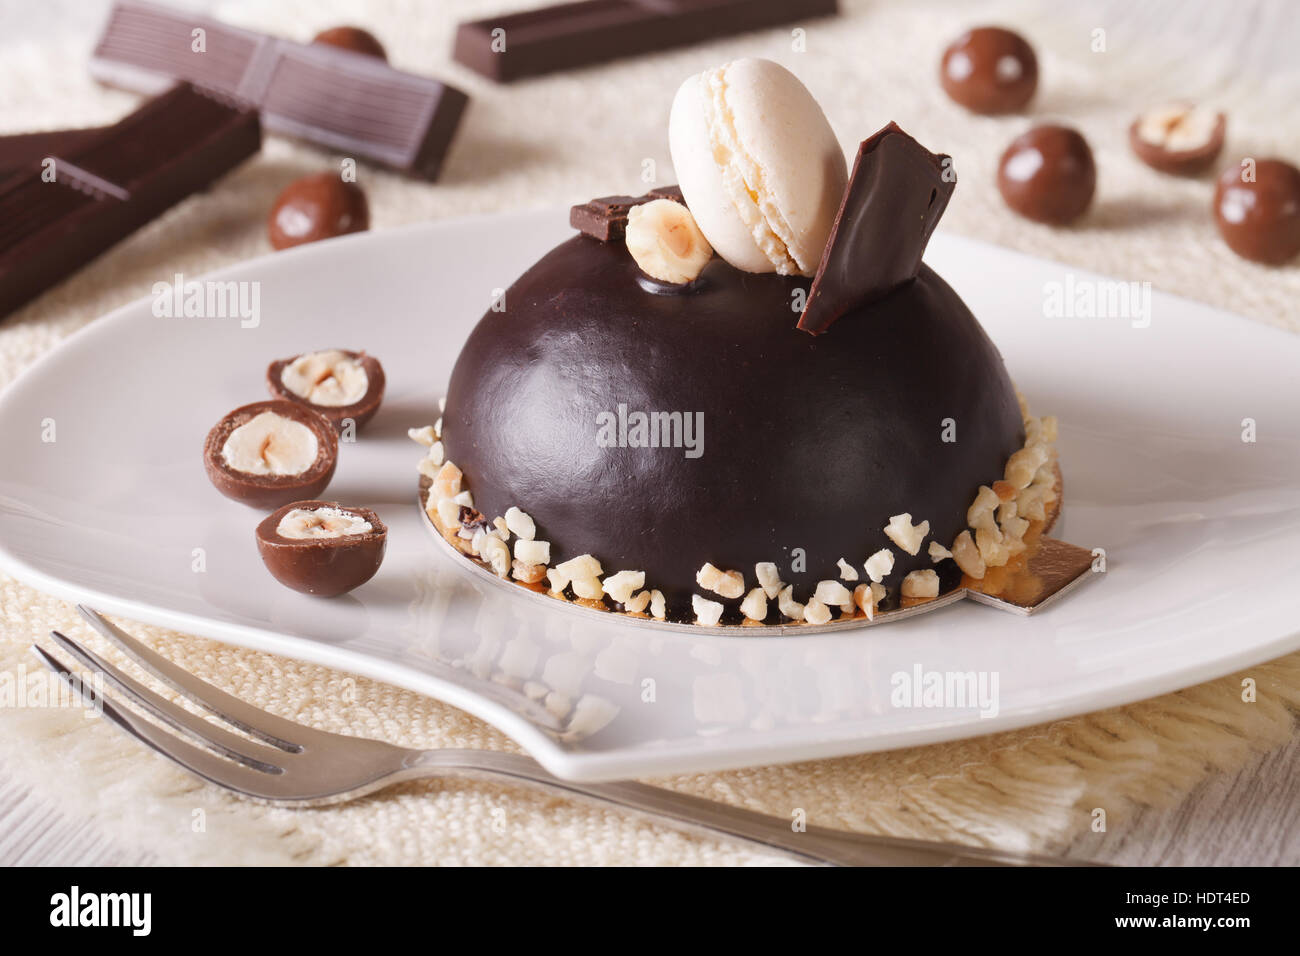 chocolate cake with hazelnuts, decorated macaroon on a plate. horizontal Stock Photo